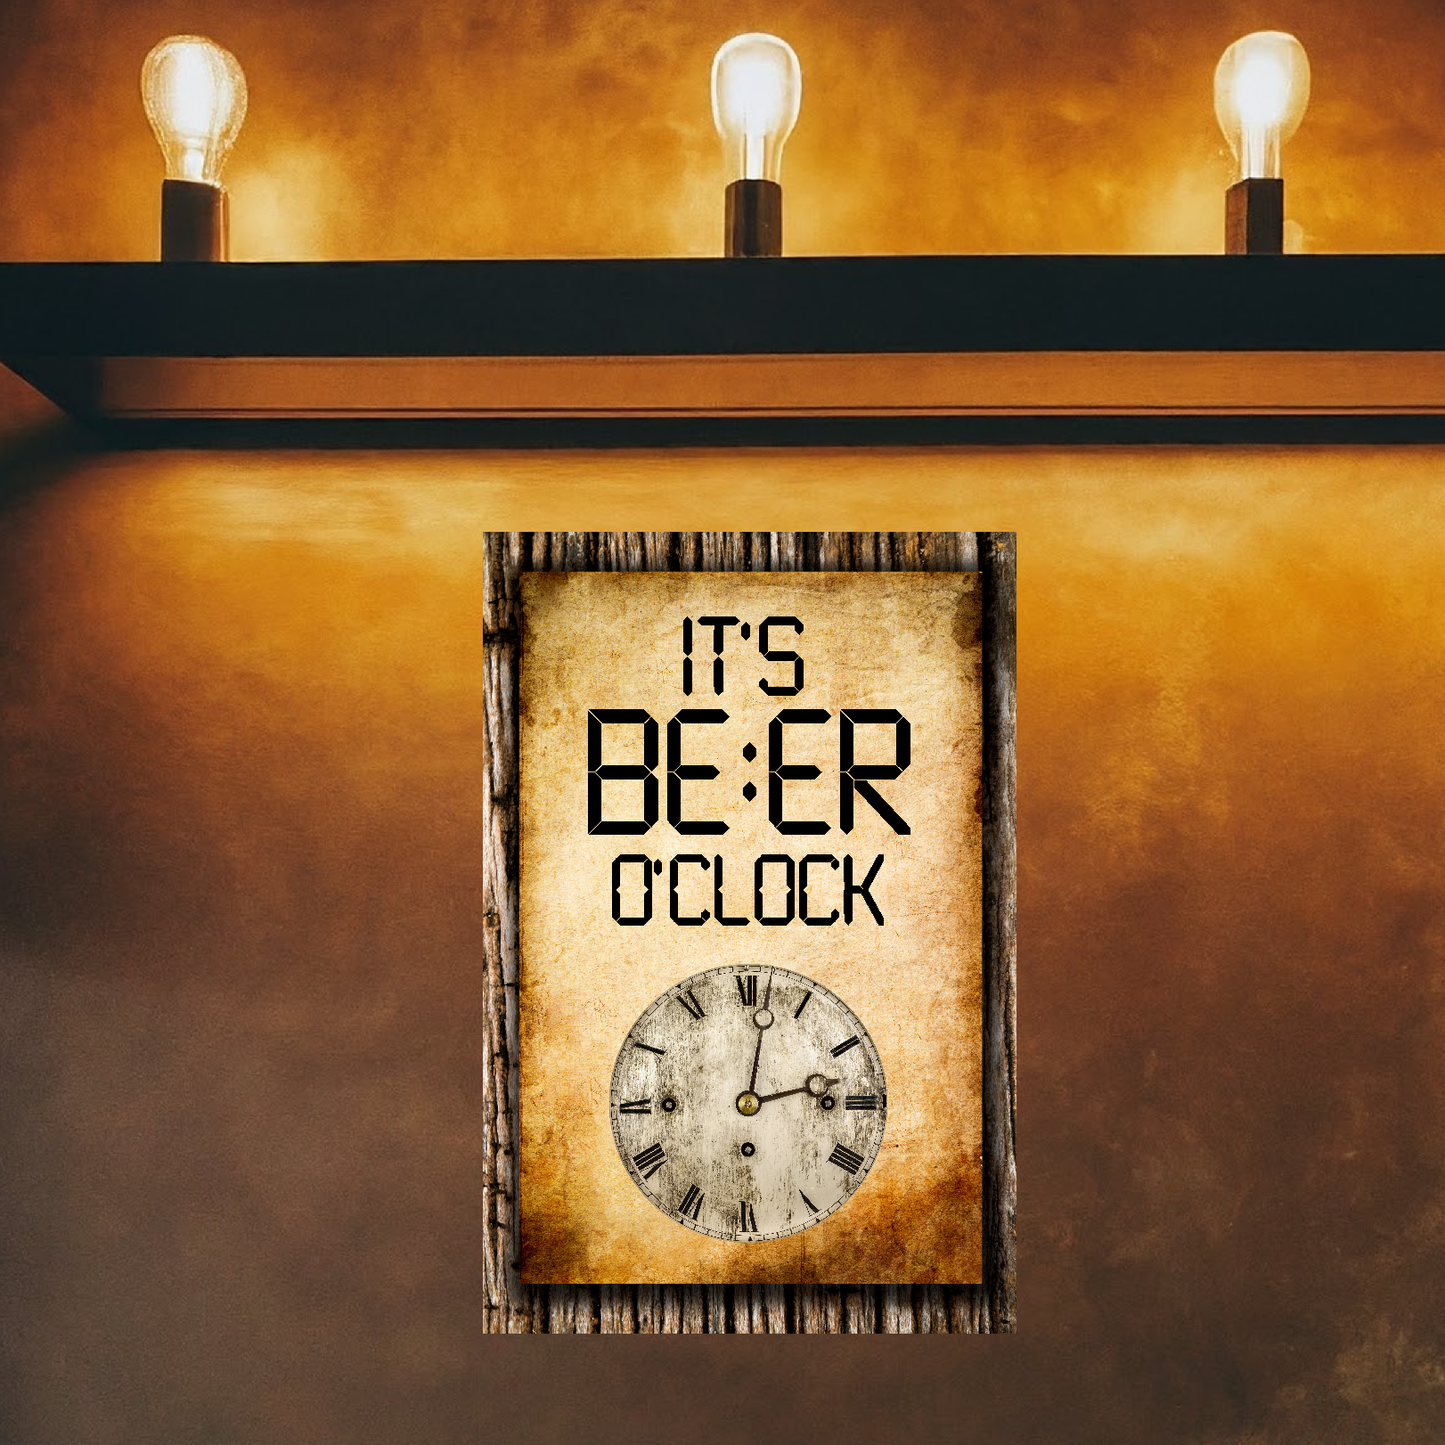 It's BEER O'clock (clock) - 12" x 18" Vintage Metal Sign